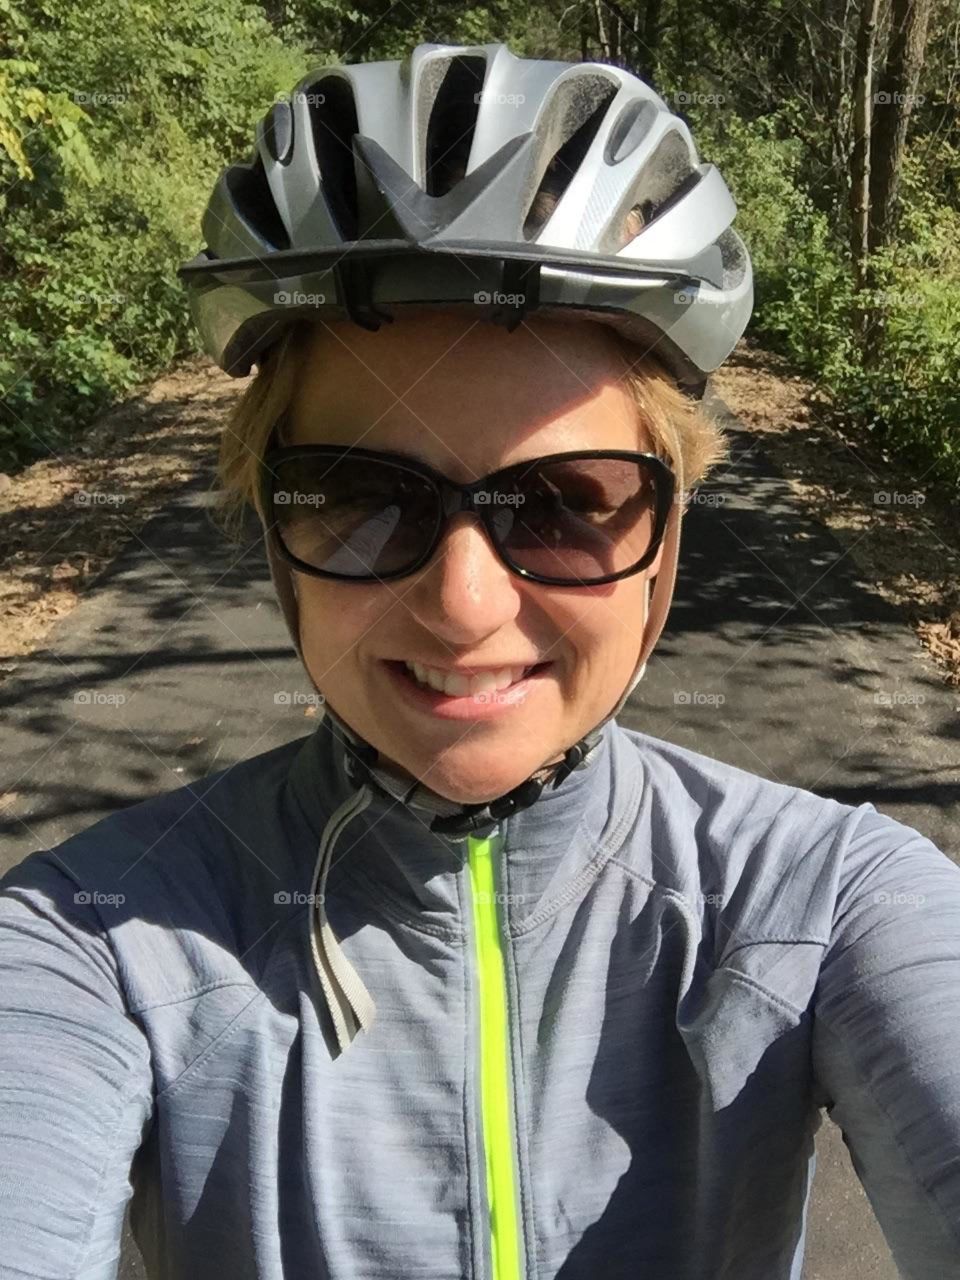 Biker selfie. Selfie while biking in Lanesboro, mn